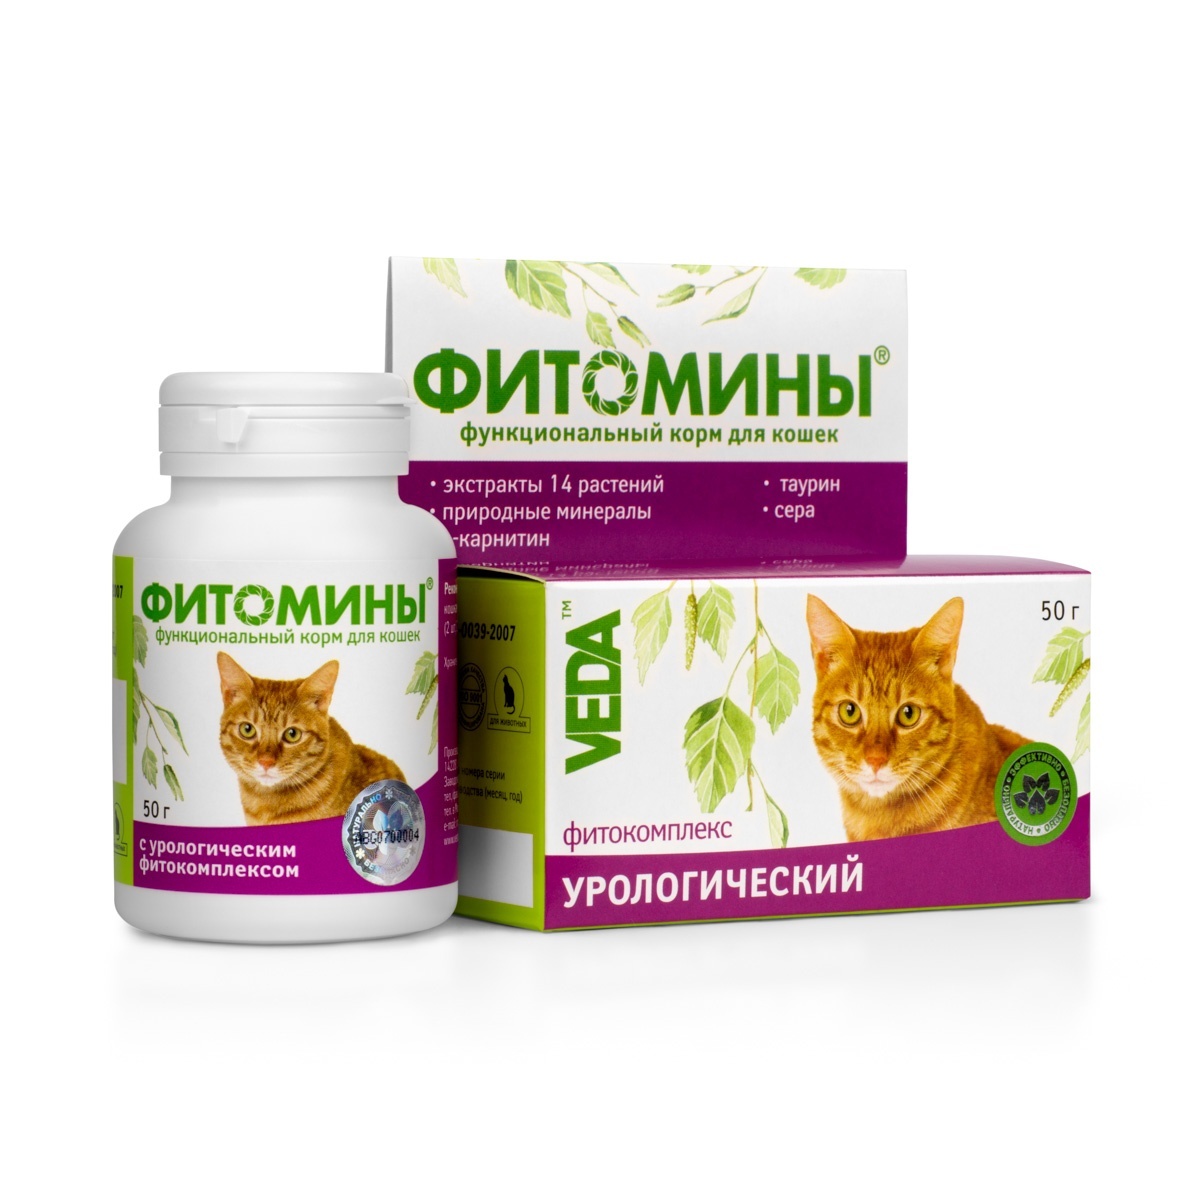 Веда Веда фитомины: профилактика МКБ кошек (урология), 100 таб. (50 г)